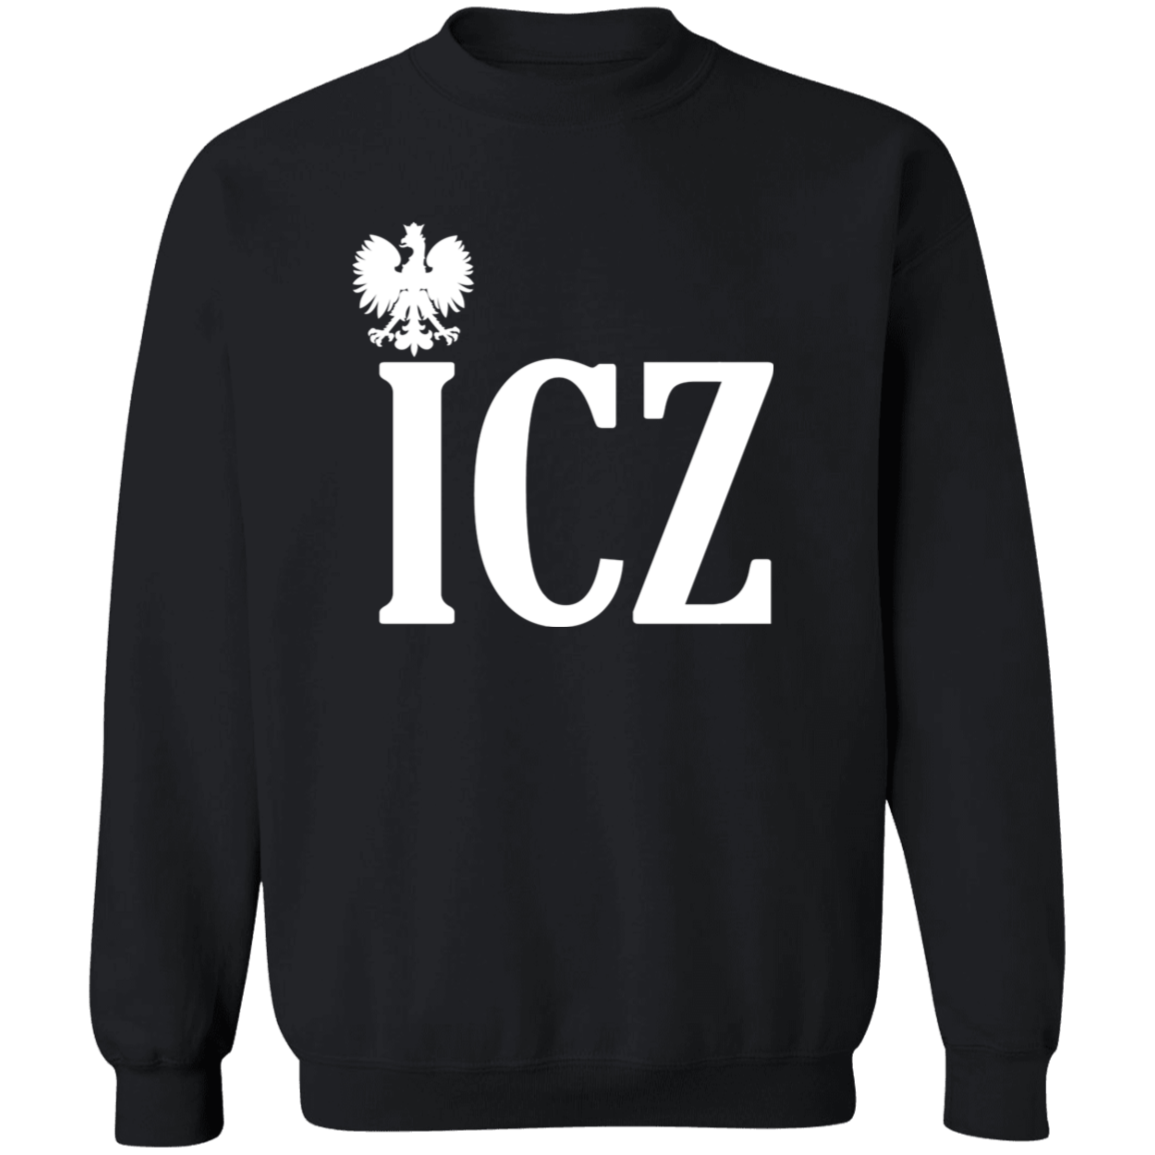 ICZ Polish Surname Ending Apparel CustomCat G180 Crewneck Pullover Sweatshirt Black S